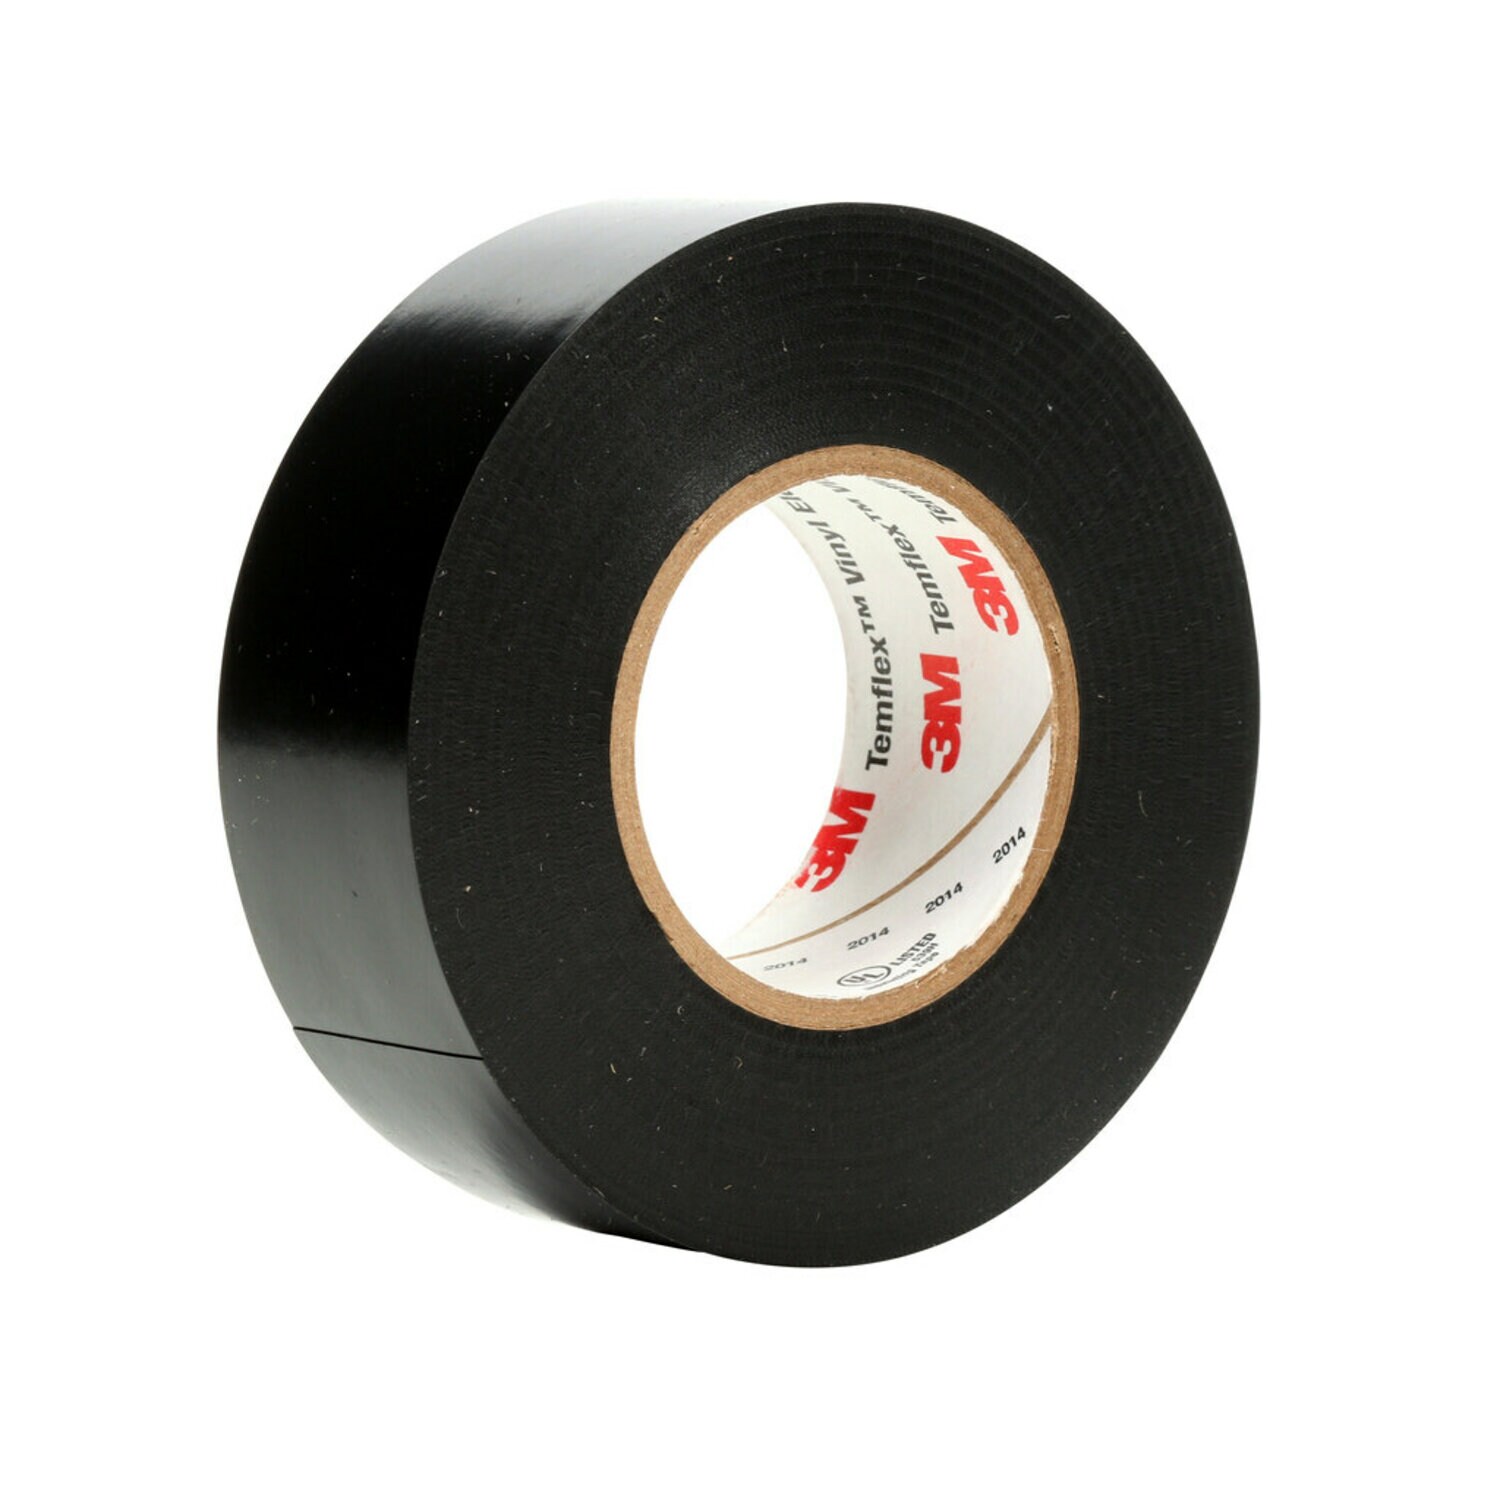 7010399125 - 3M Temflex Vinyl Electrical Tape 1700, 2 in x 36 yd, Black, 25
rolls/Case